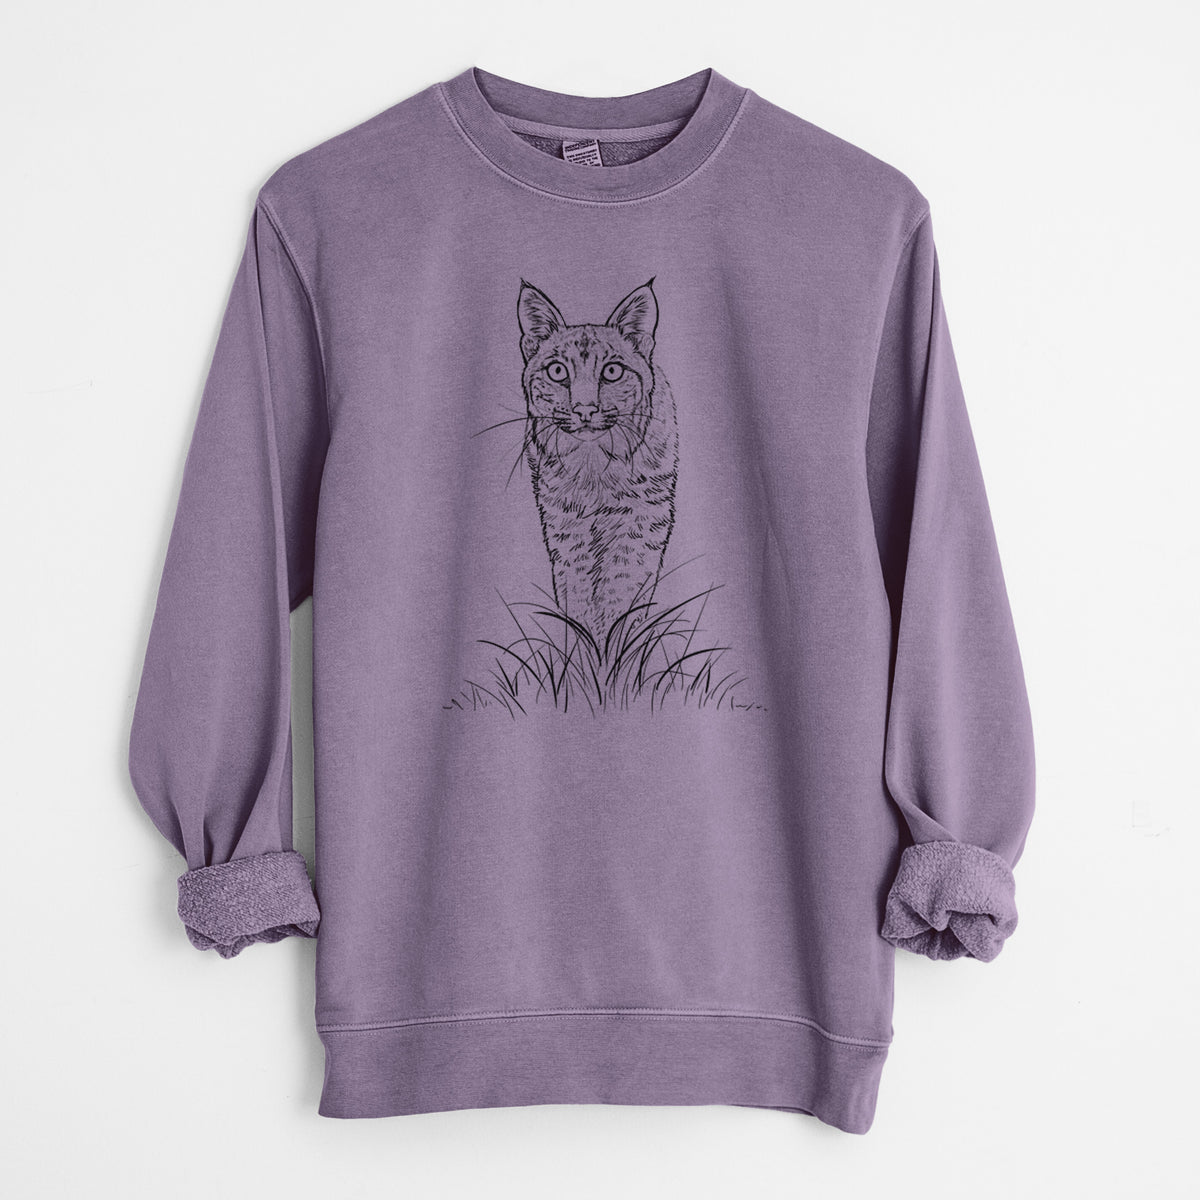 Bobcat - Lynx rufus - Unisex Pigment Dyed Crew Sweatshirt